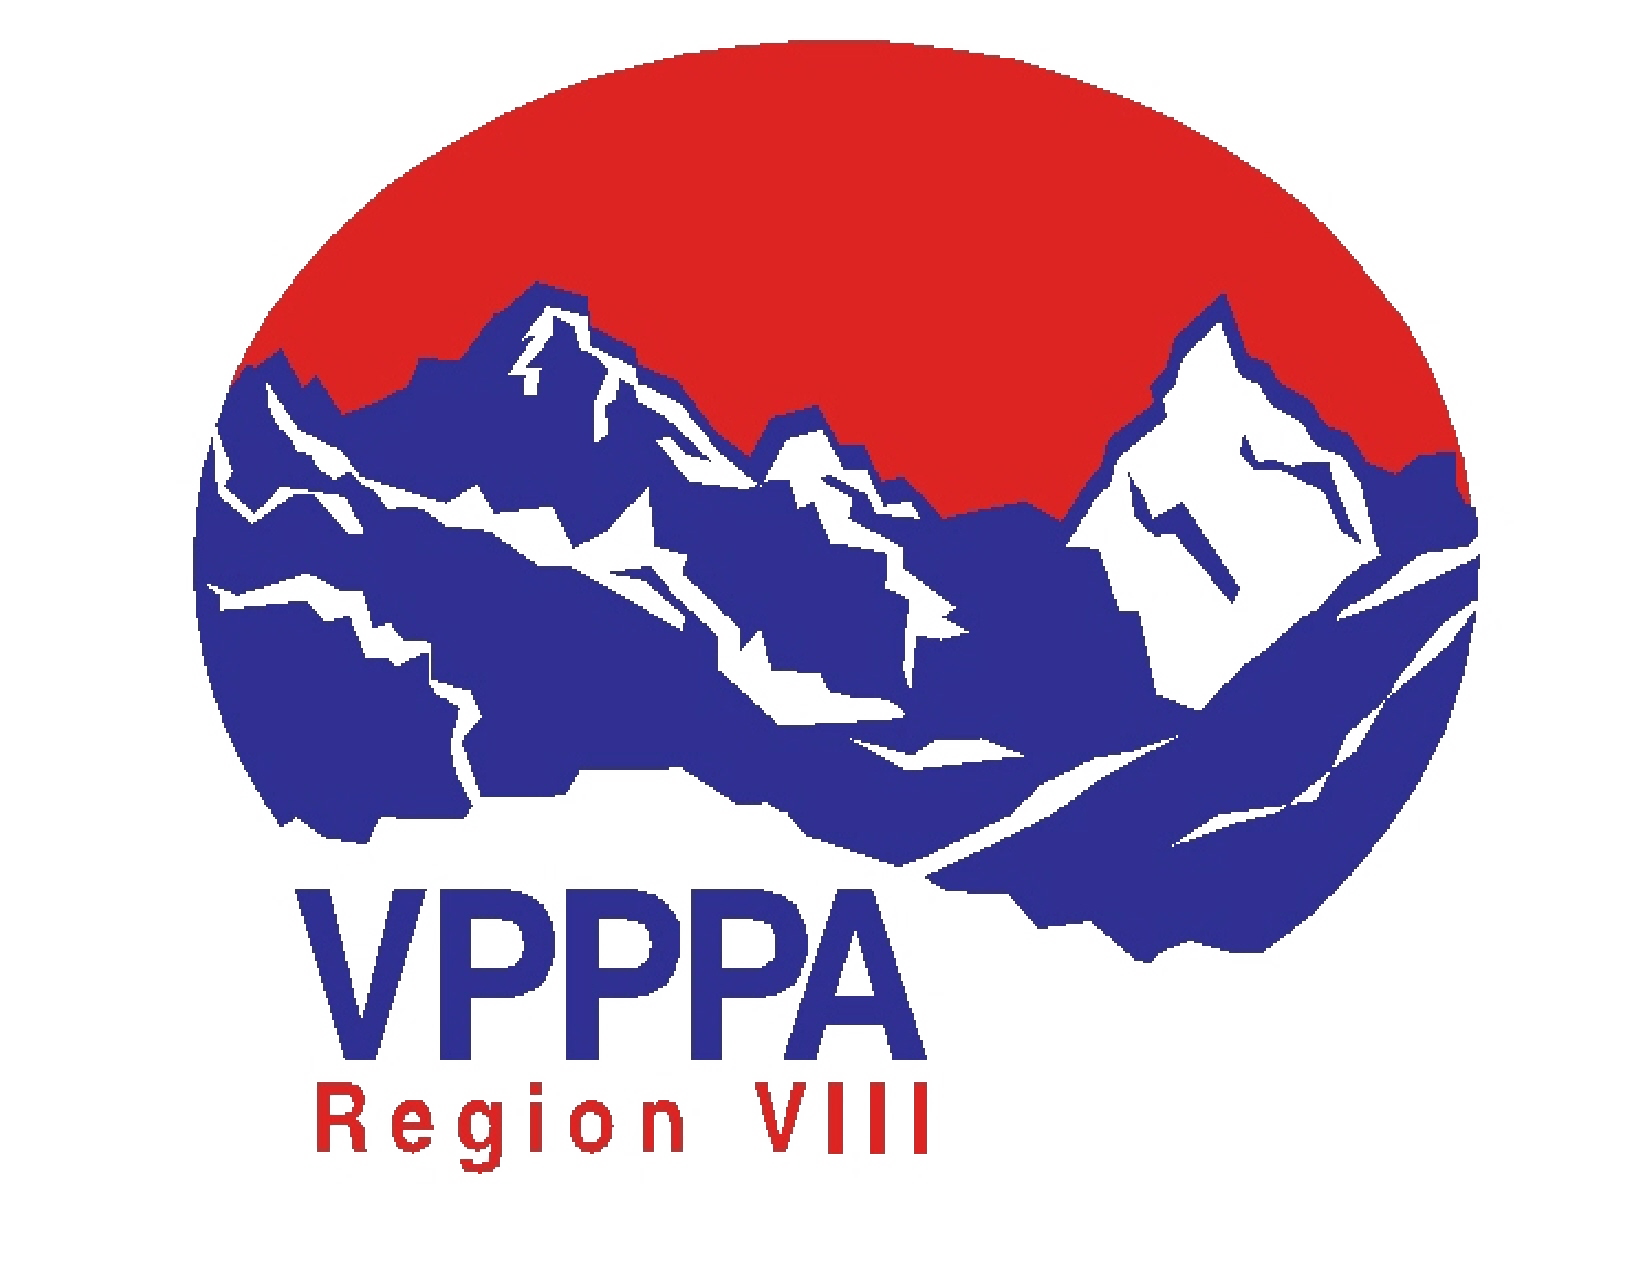 Region 8 VPPPA